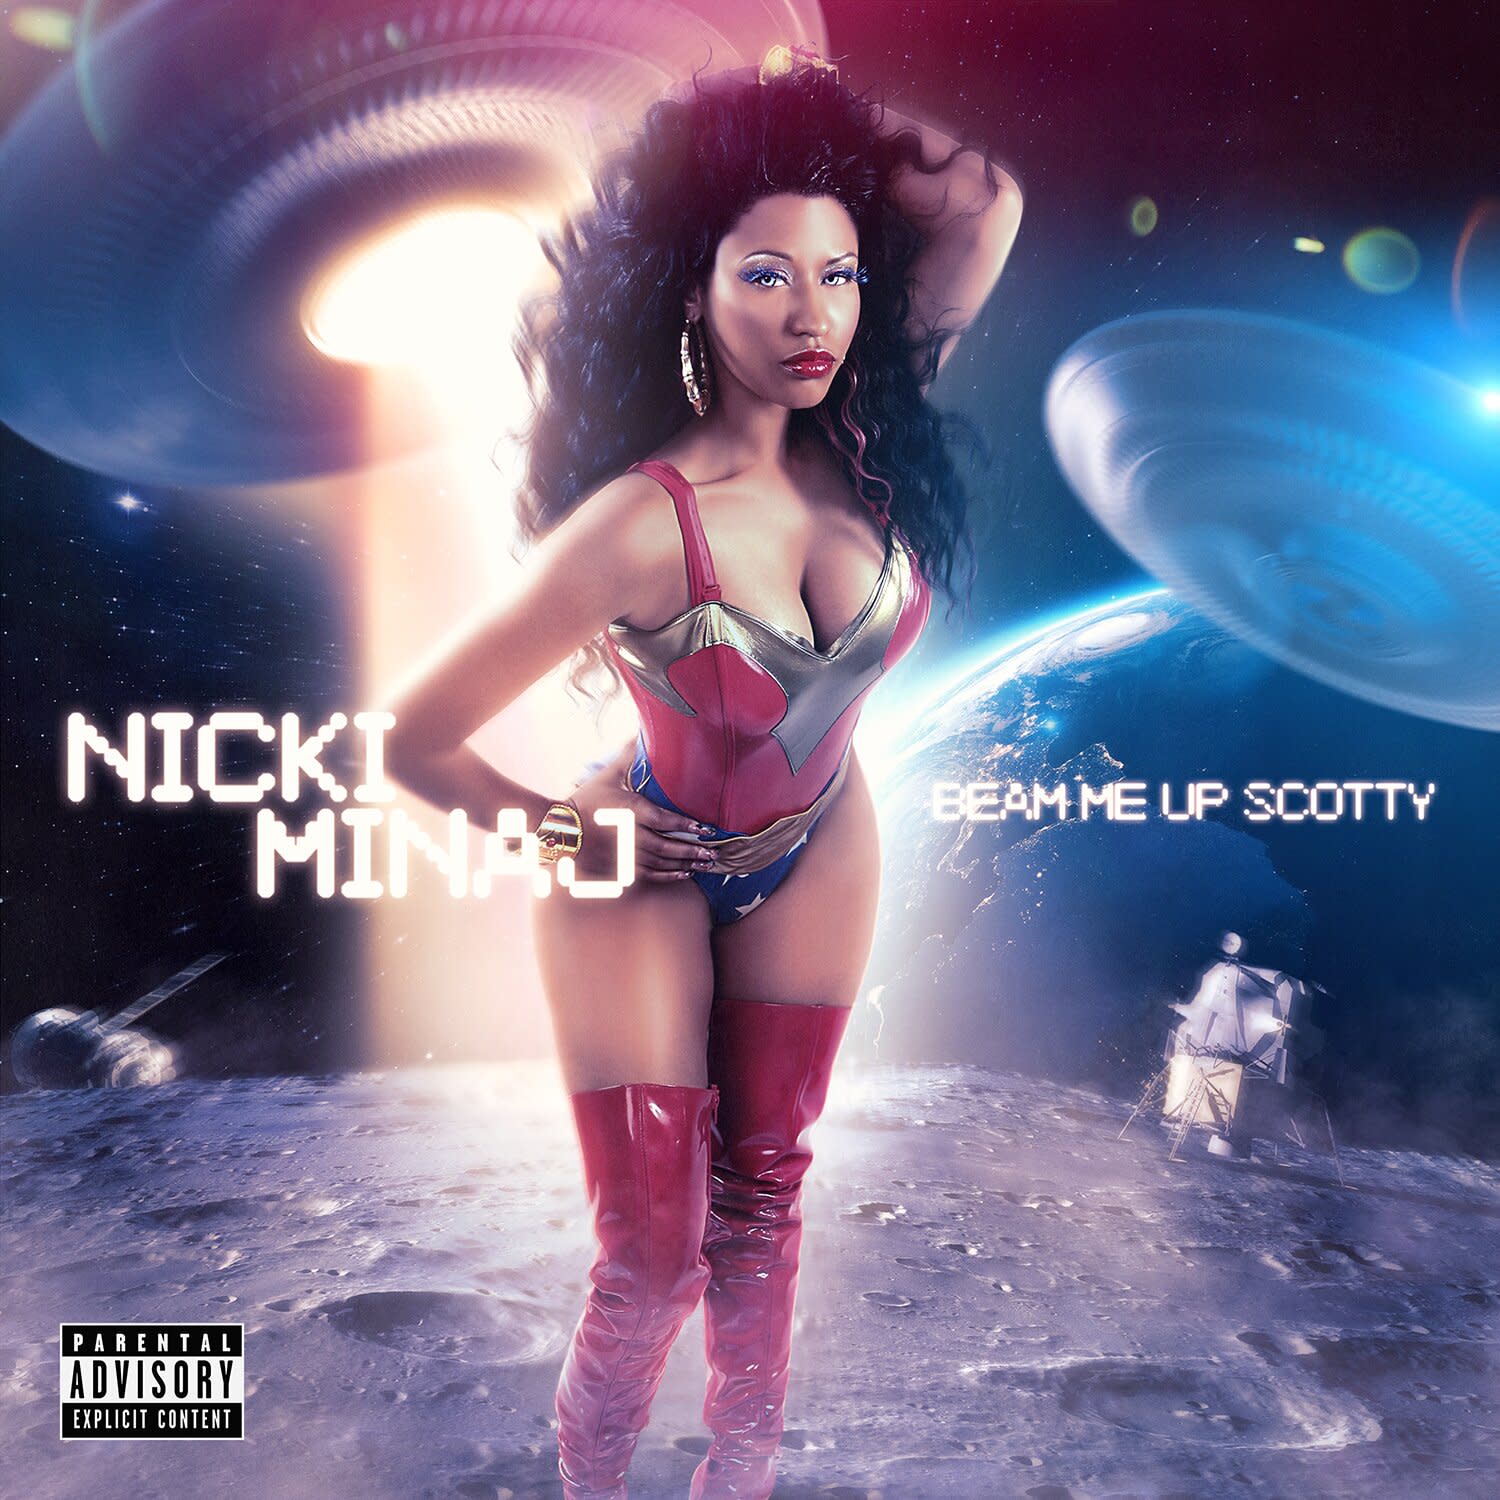 Nicki Minaj Re Releases Monumental 2009 Mixtape Beam Me Up Scotty As She Reunites With Drake